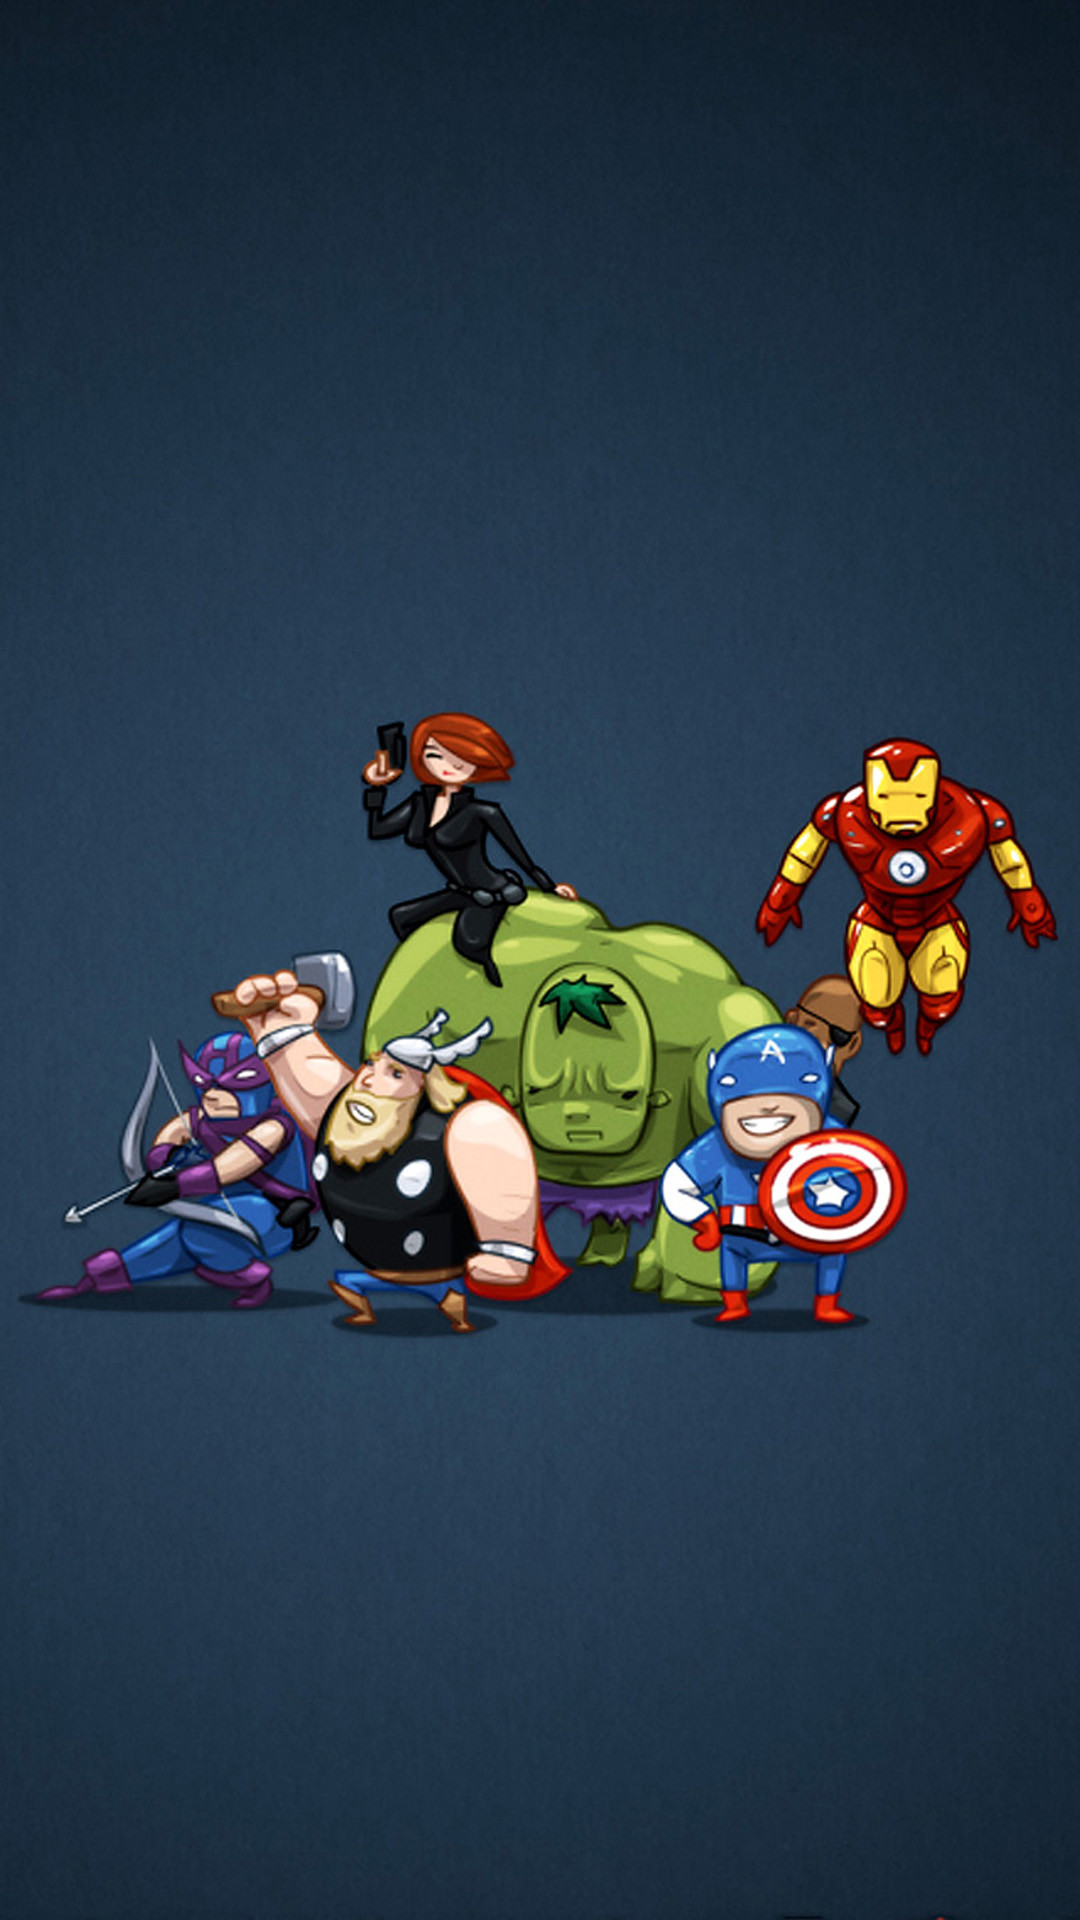 1080x1920 The Avengers iPhone 5 Wallpaper